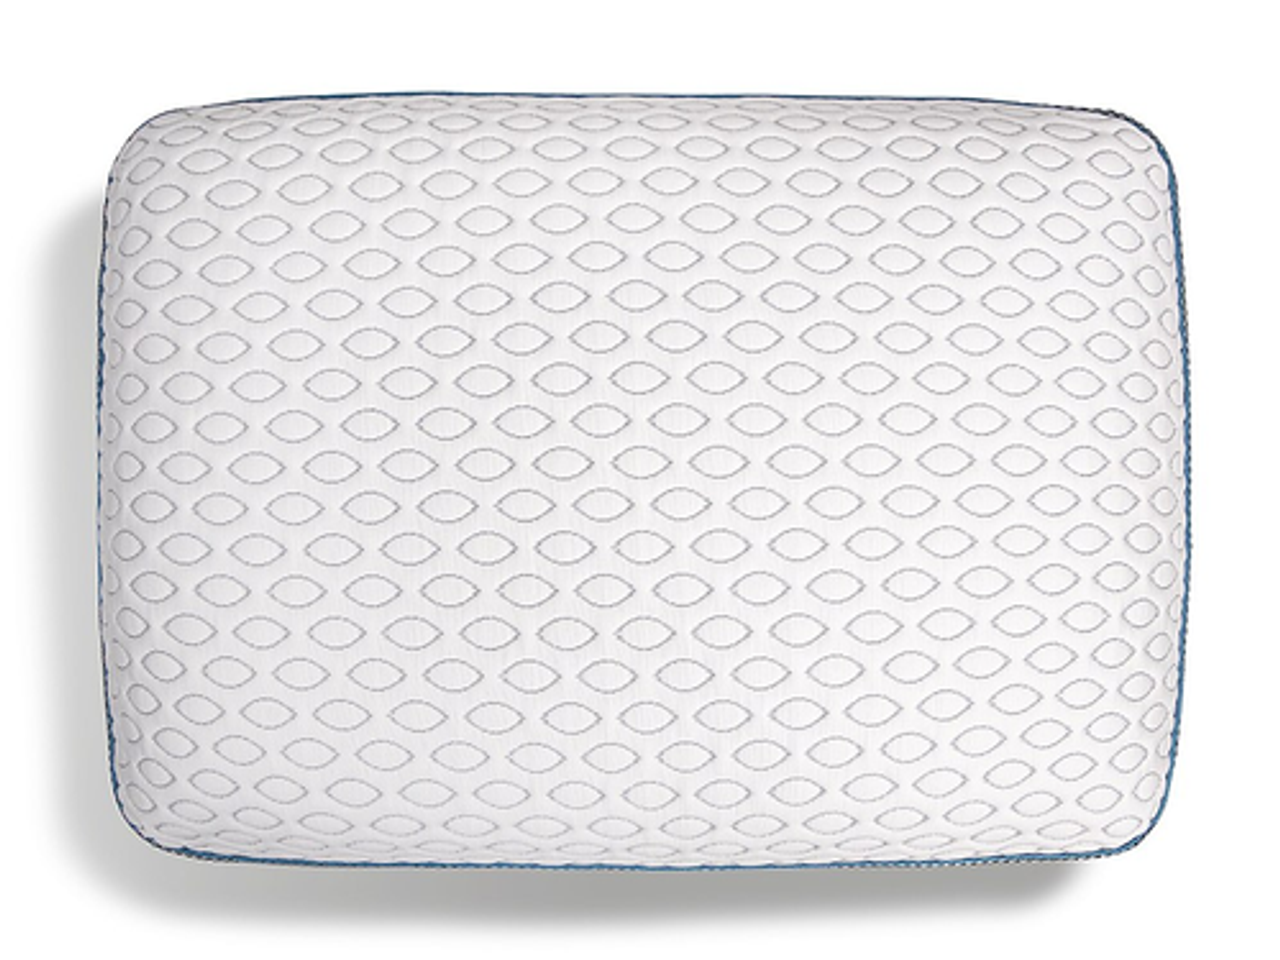 Bedgear - Frost King Pillow 3.0 - White